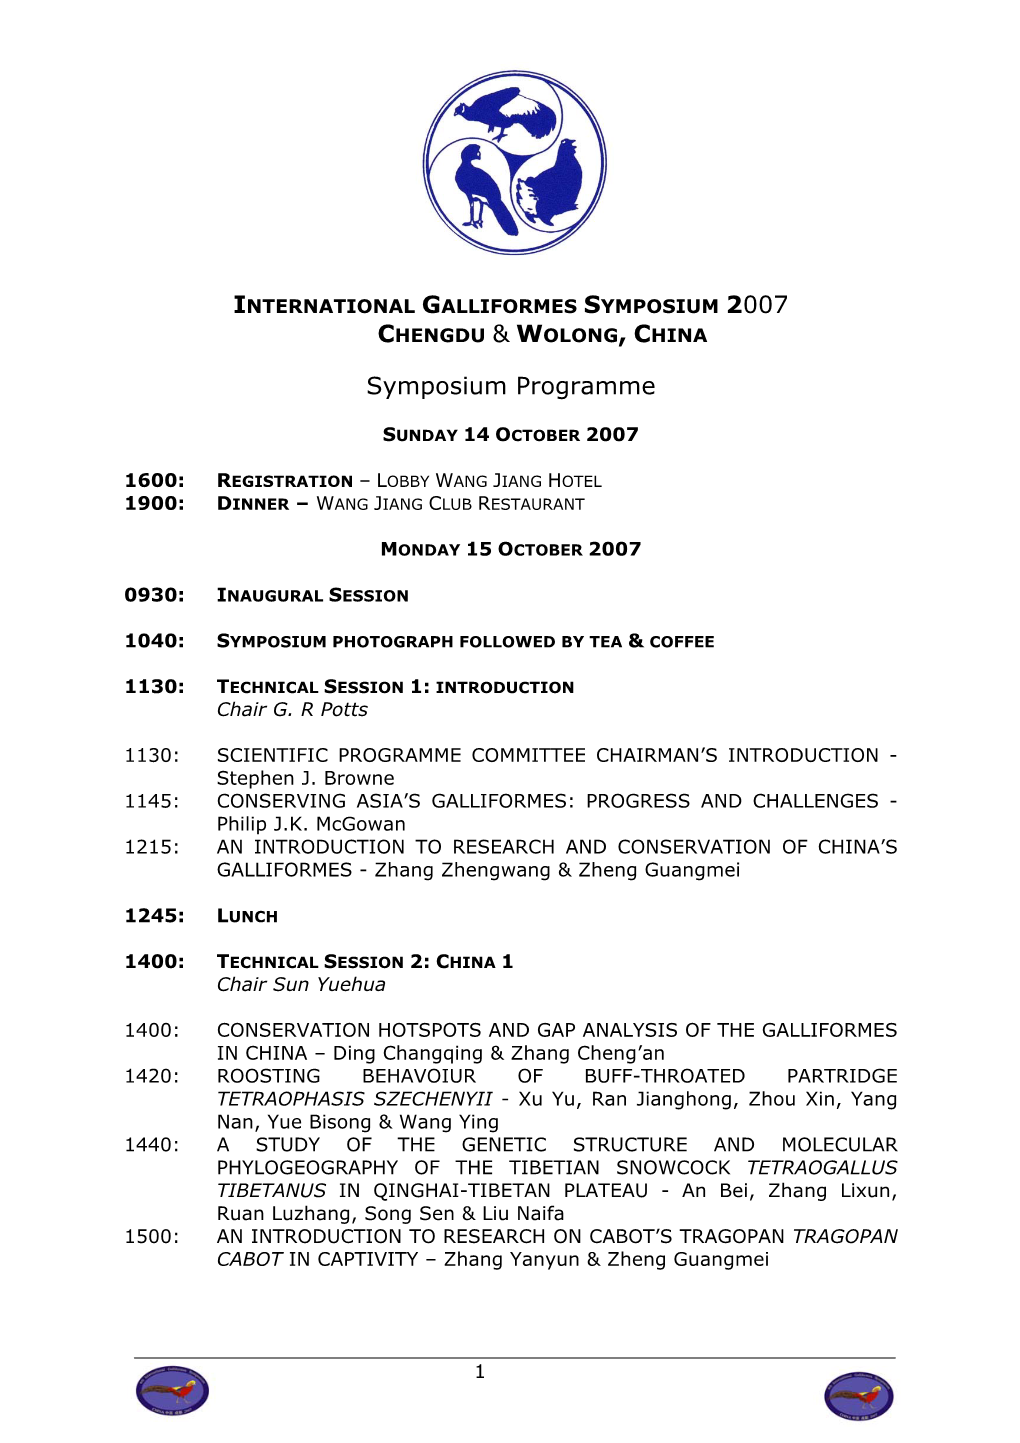 International Galliformes Symposium 2004